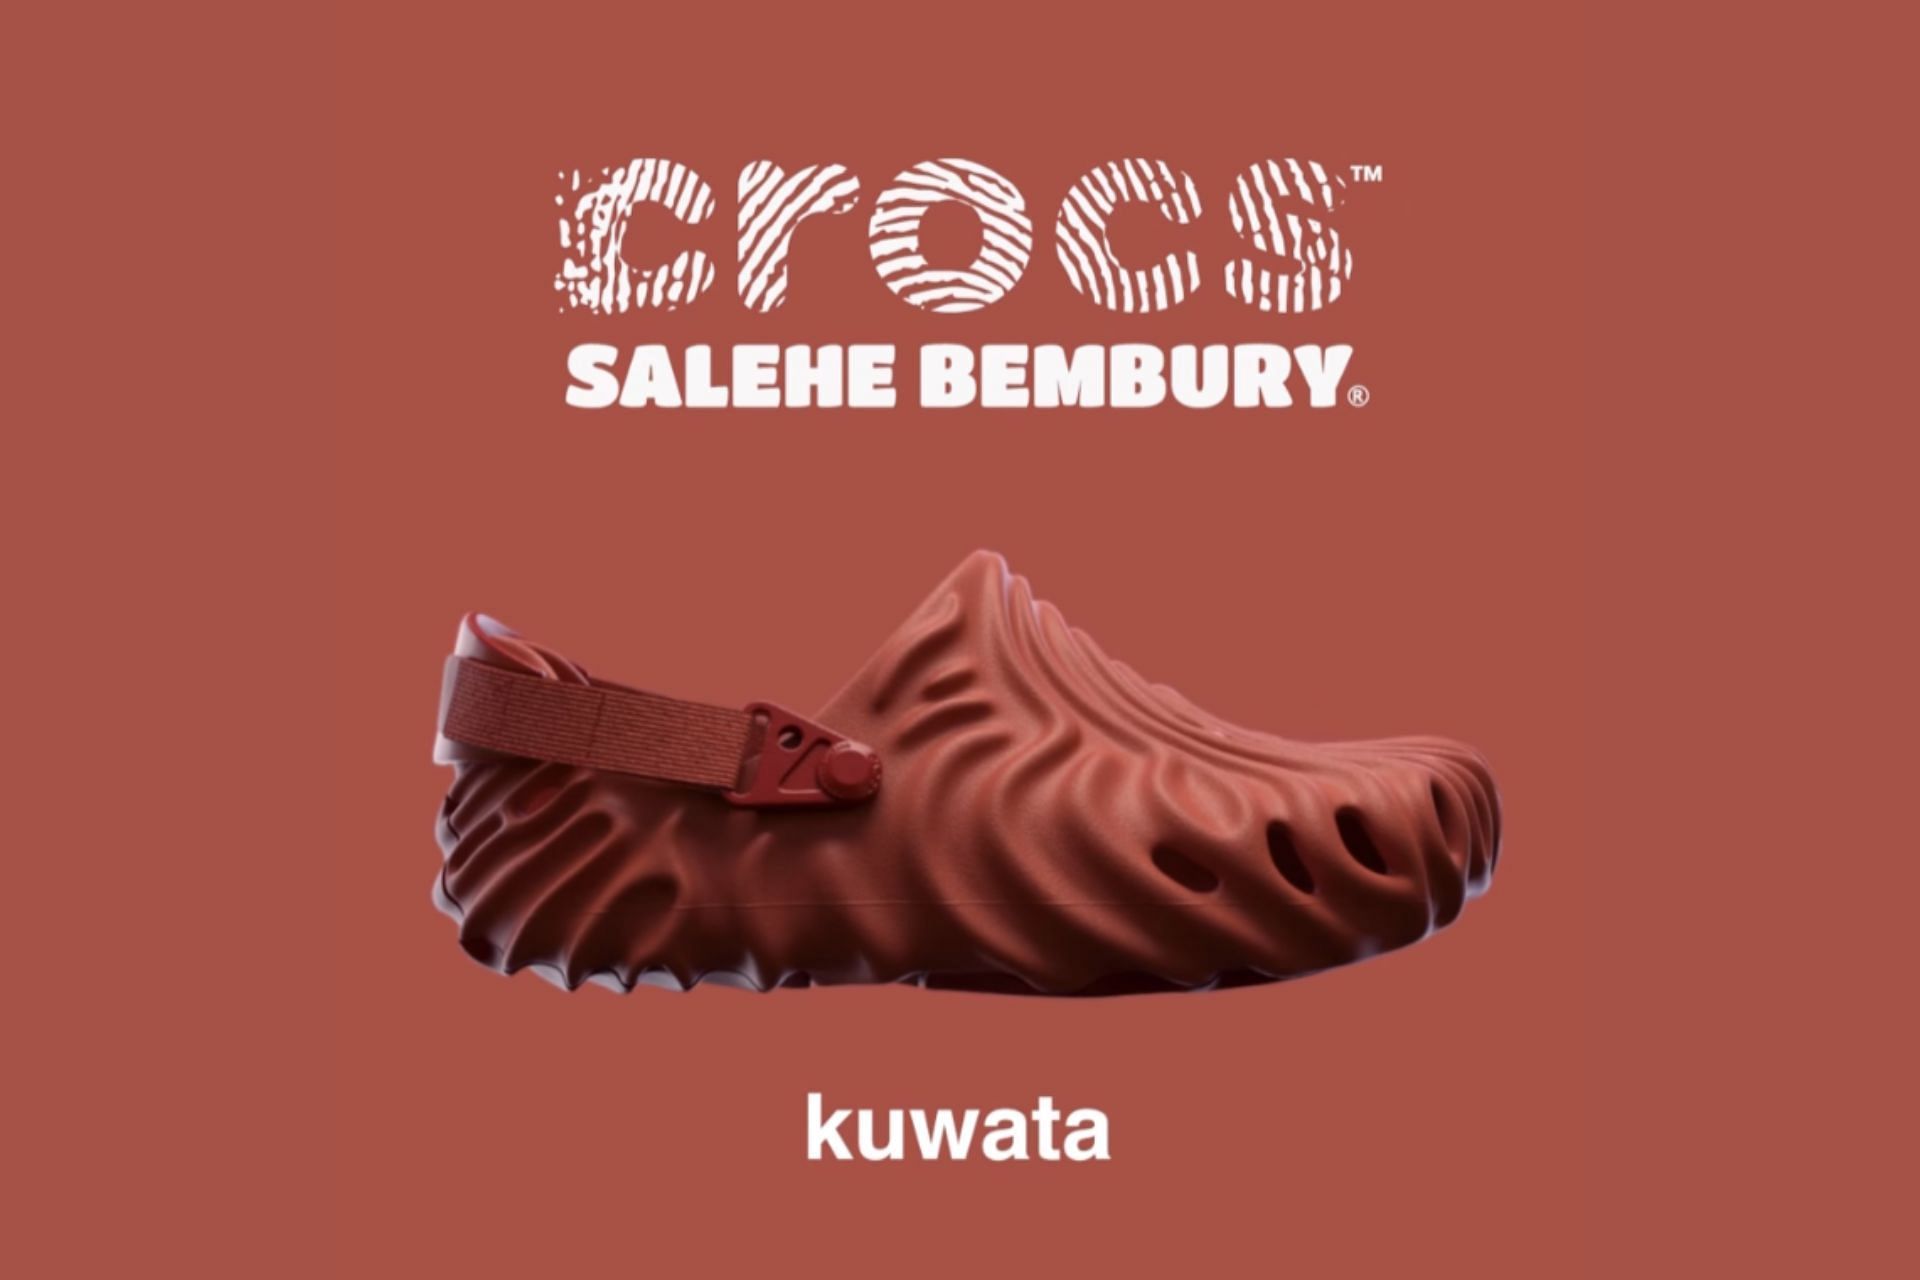 Salehe Bembury x Crocs Pollex Clogs Kuwata colorway (Image via Crocs)